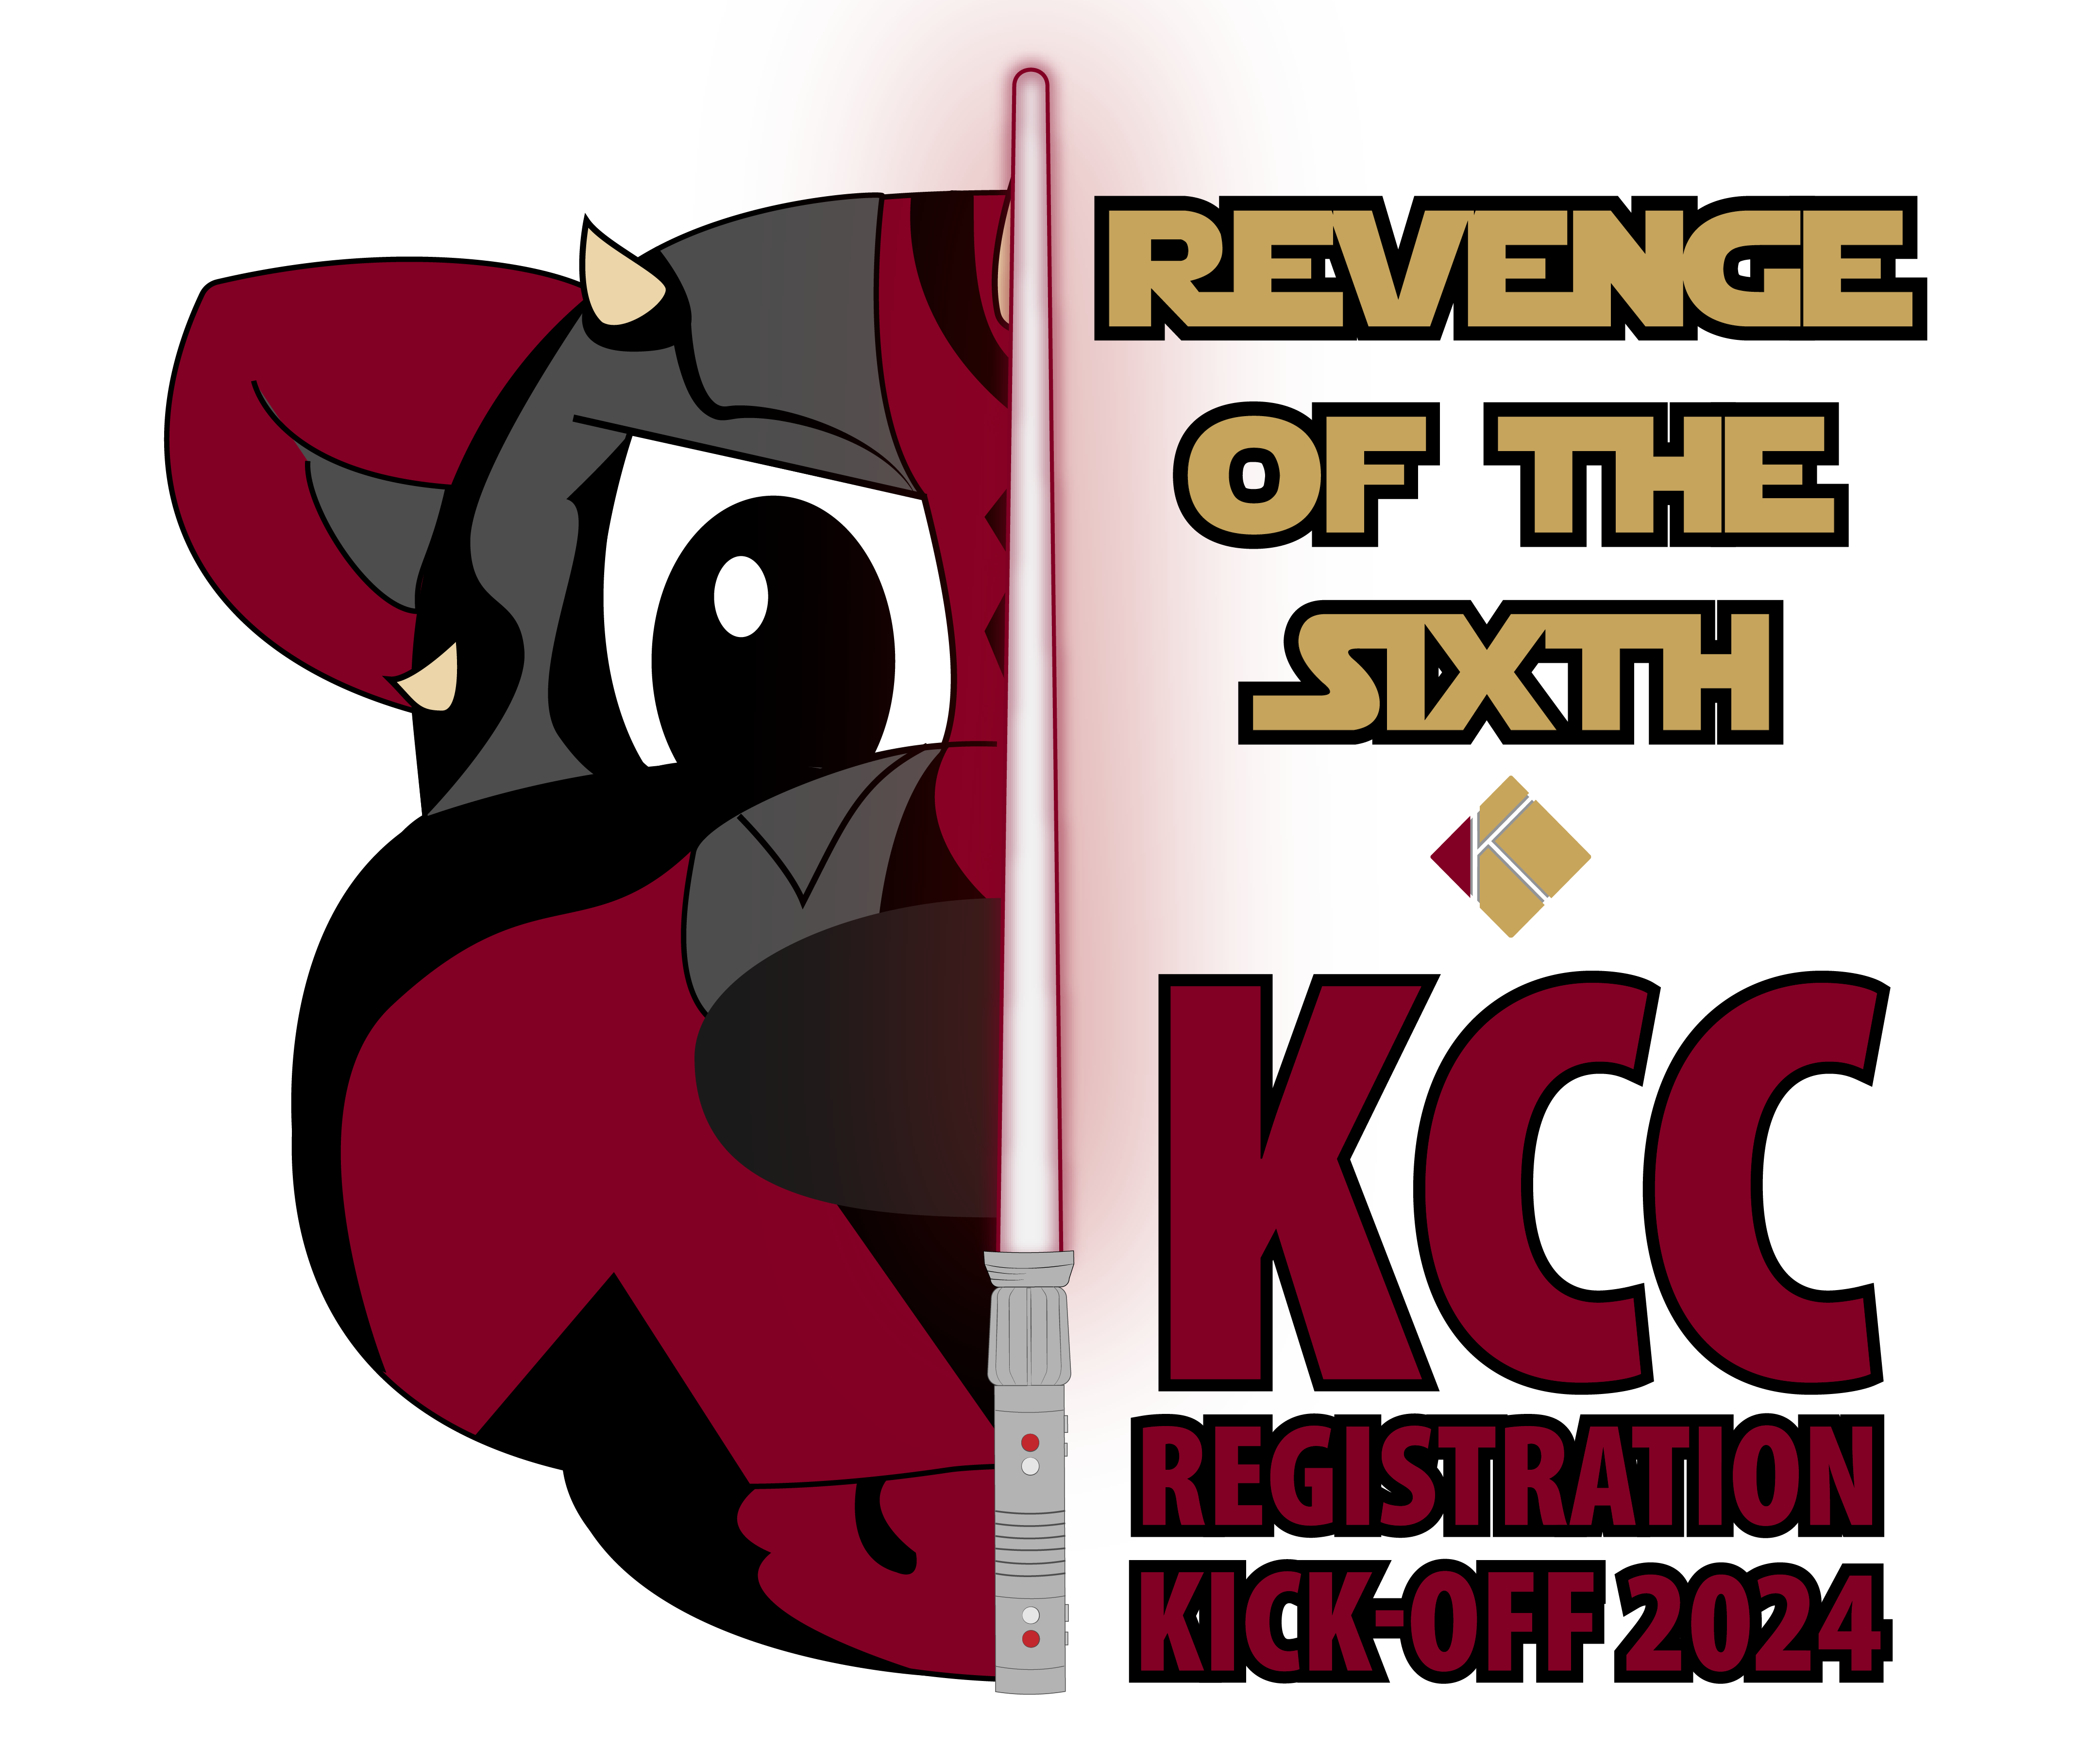 Revenge of the Sixth Registration Kick-Off